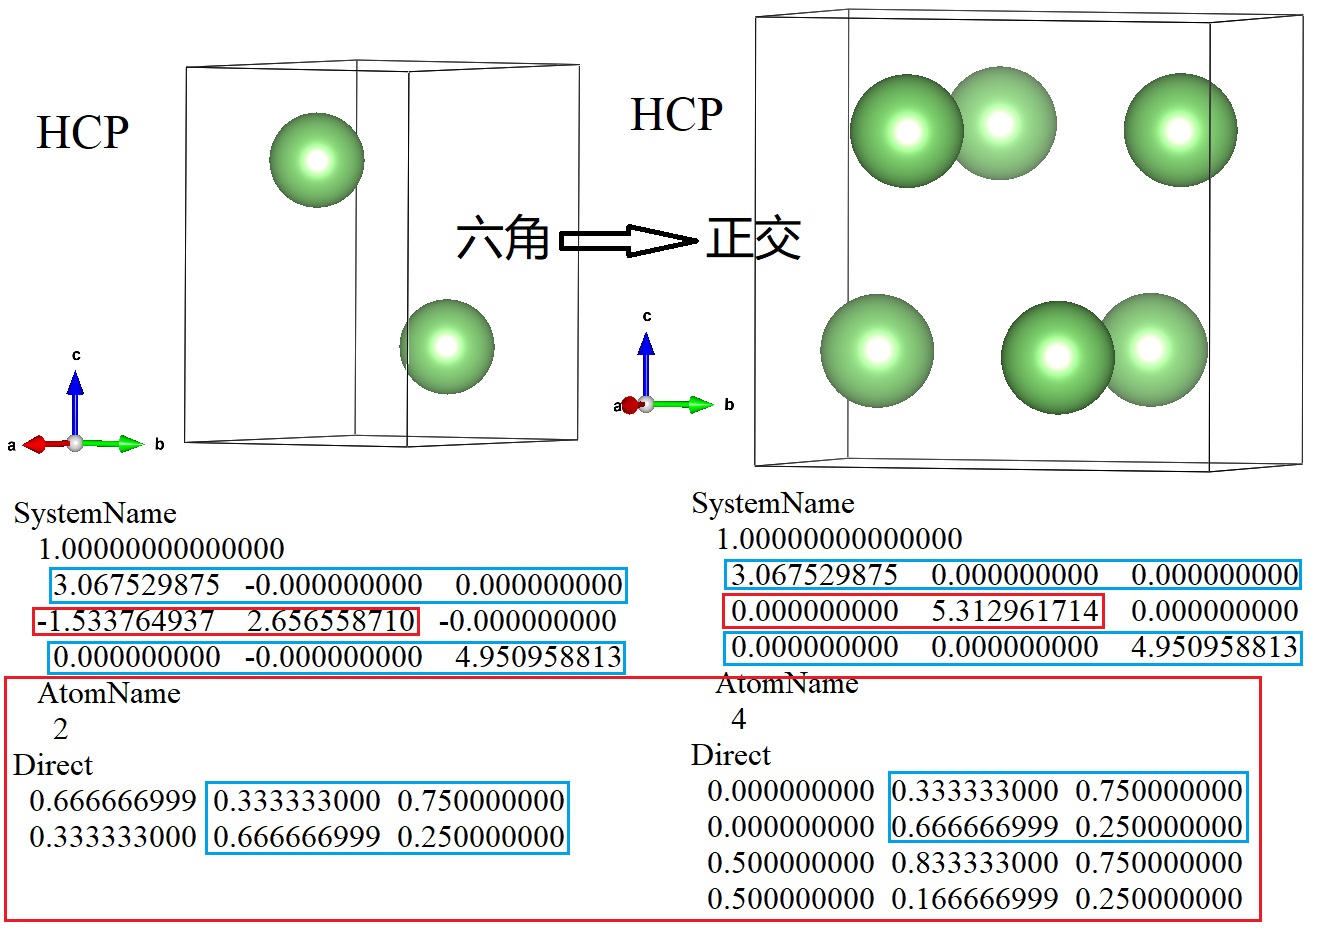 HCPhcp-HCPcubic.jpg